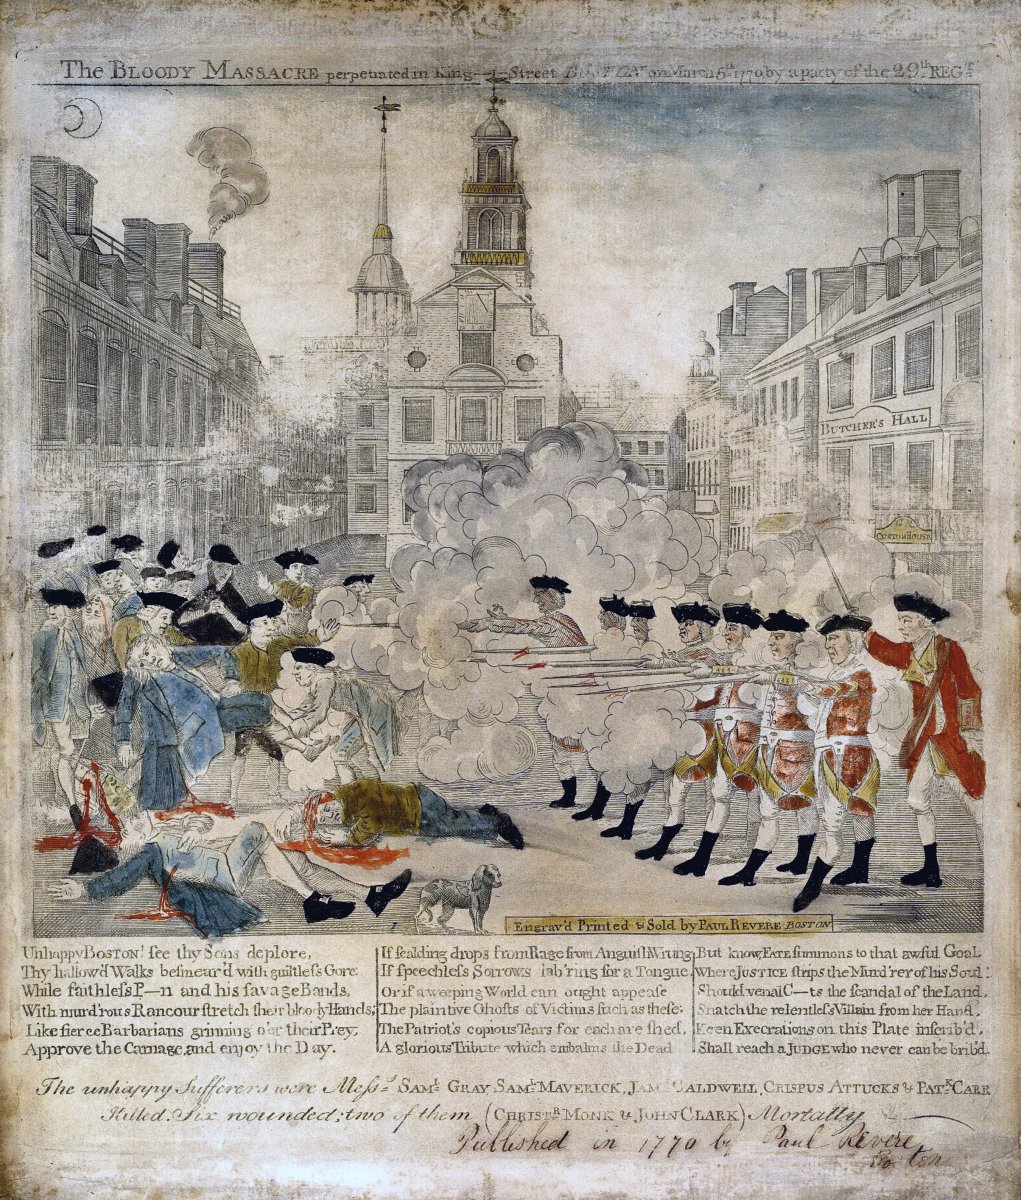 Propaganda by Paul Revere depicting the Boston Massacre of 1770.